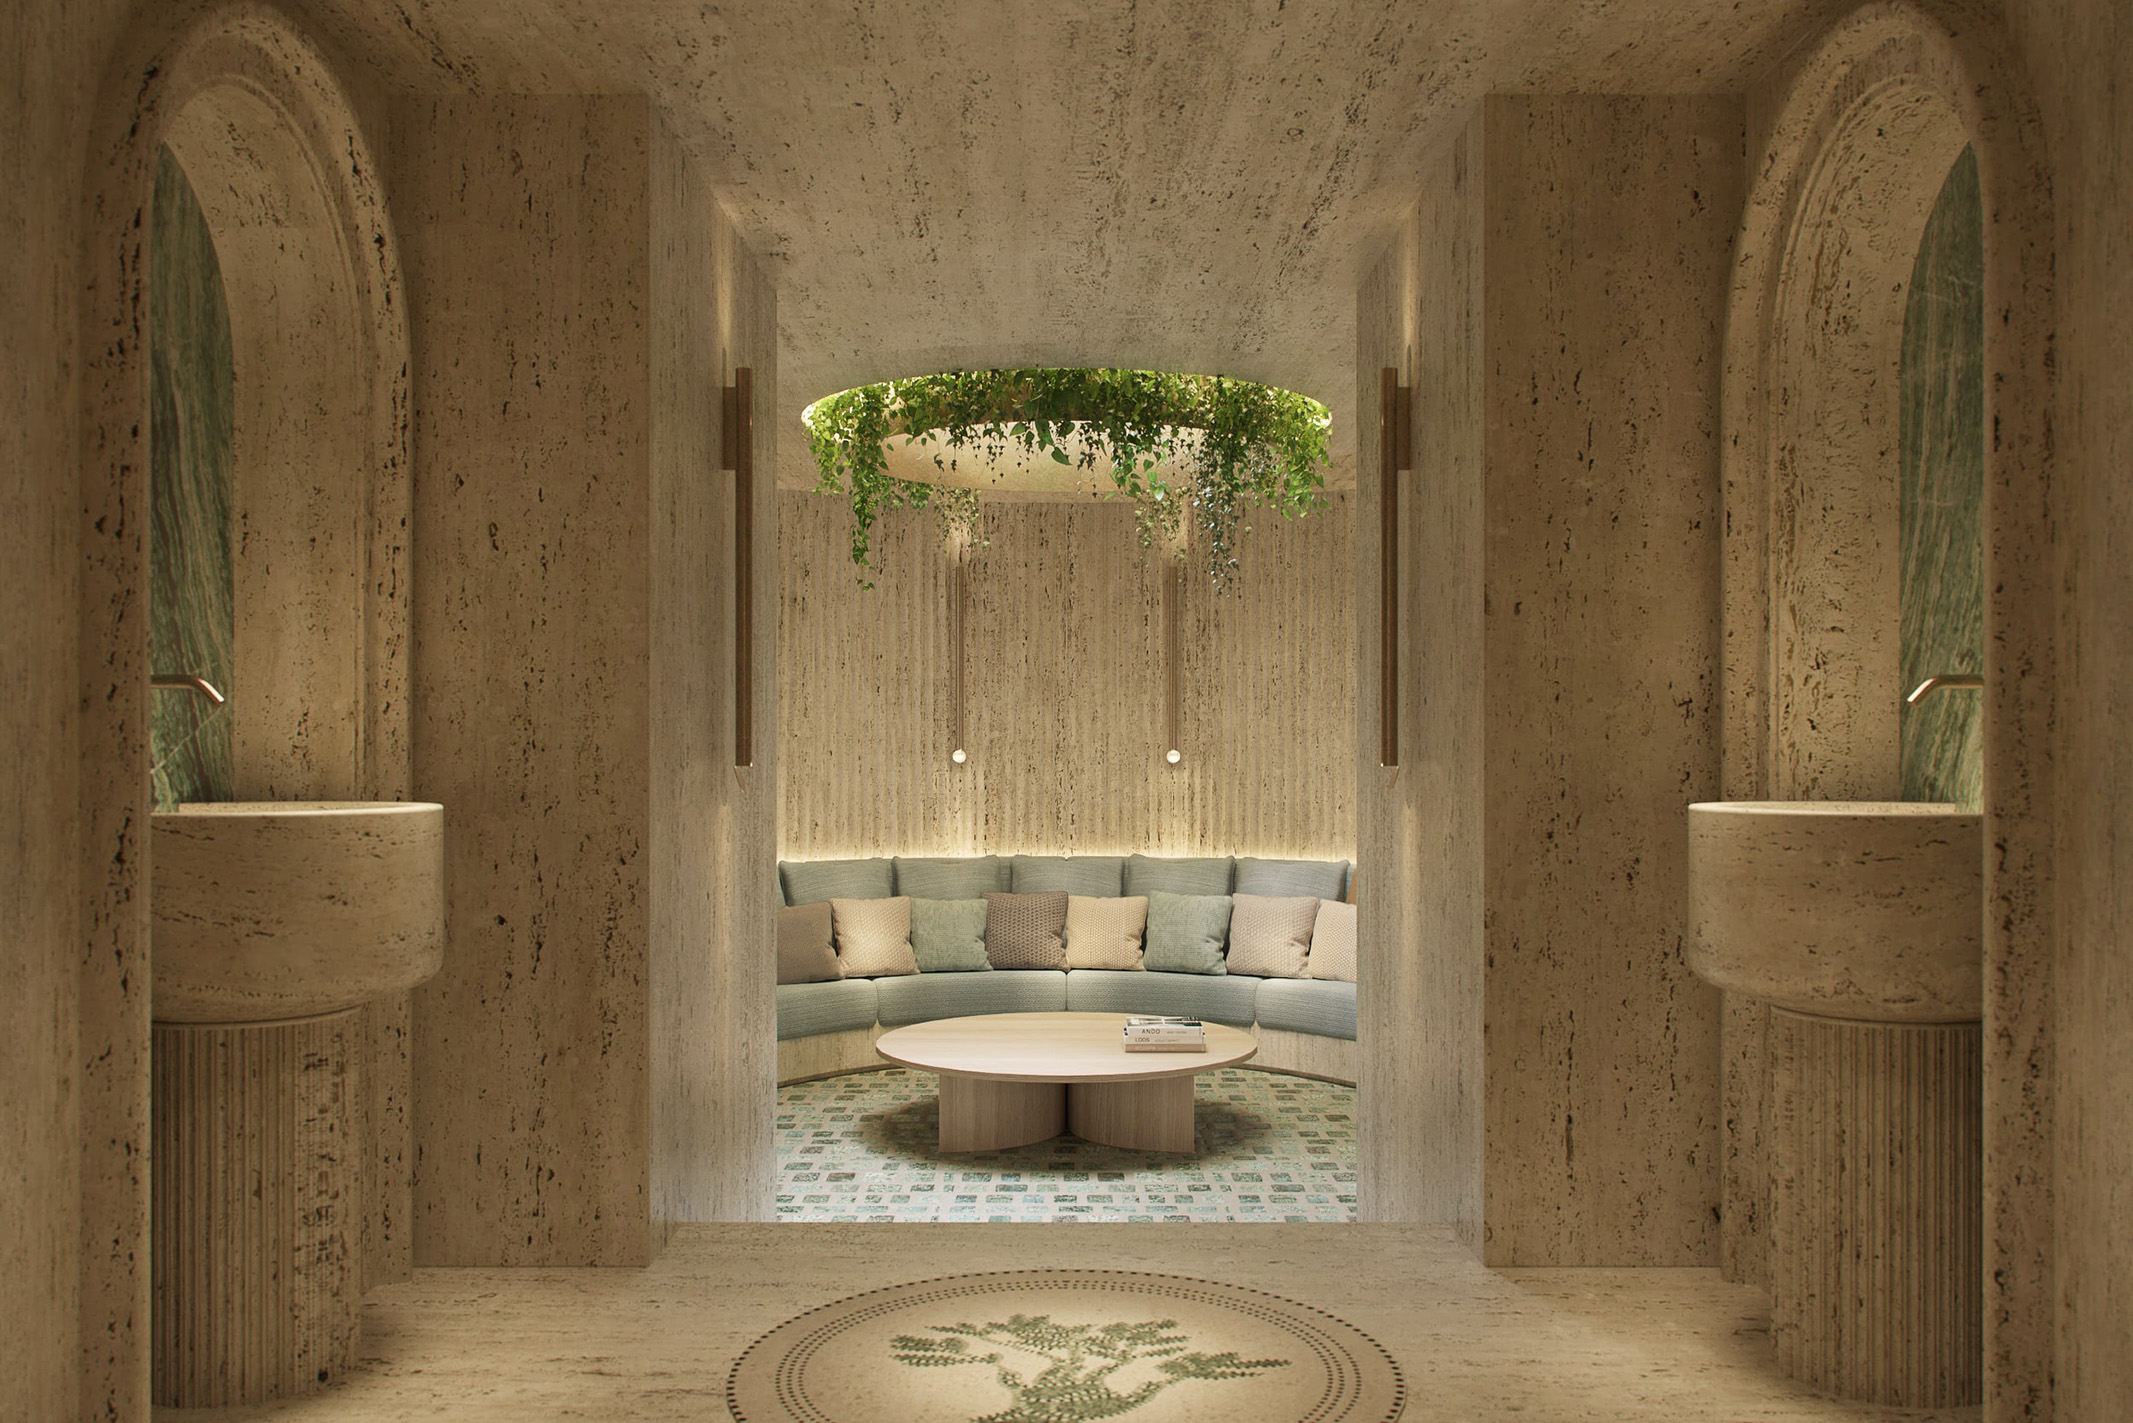 Six-Senses-Rome-This-Stunning-Italian-Palazzo-Now-Beckons-As-Rome-New-Luxury-Wellness-Pad-Design-Pataki-Feature-Image